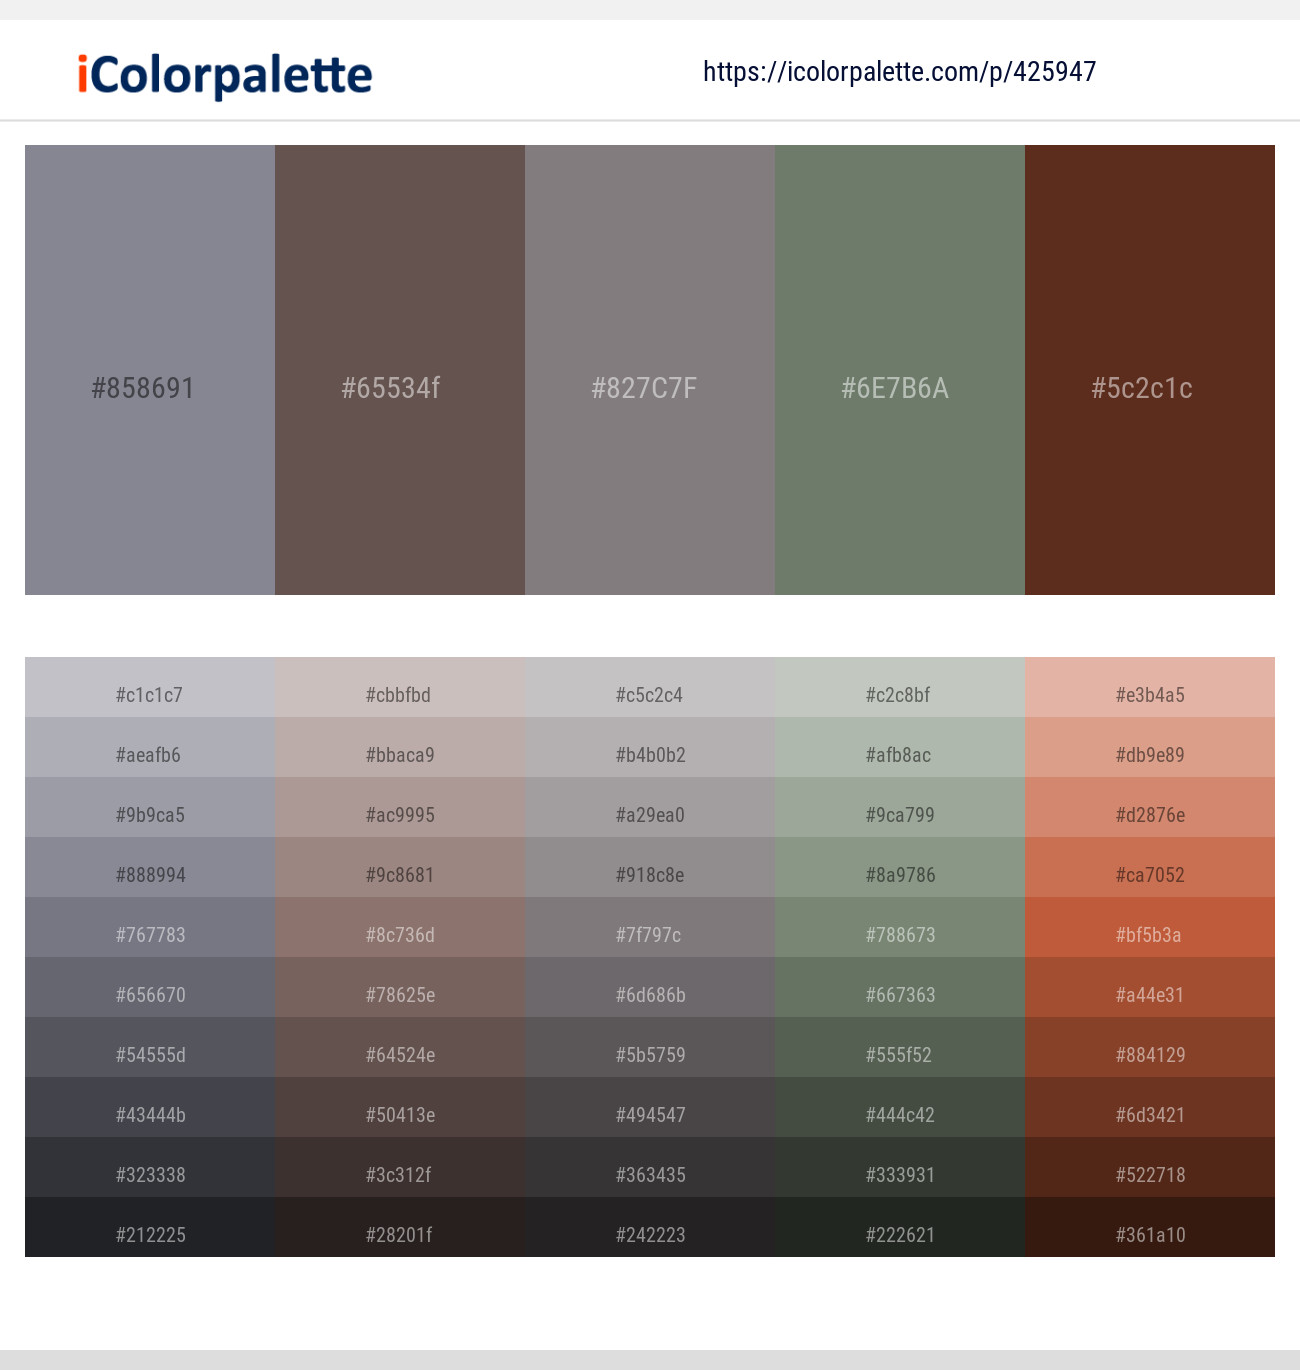 colorswall on X: Shades of Espresso color #4E312D hex #4e312d, #462c29,  #3e2724, #37221f, #2f1d1b, #271917, #1f1412, #170f0e, #100a09, #080504 # colors #palette   / X